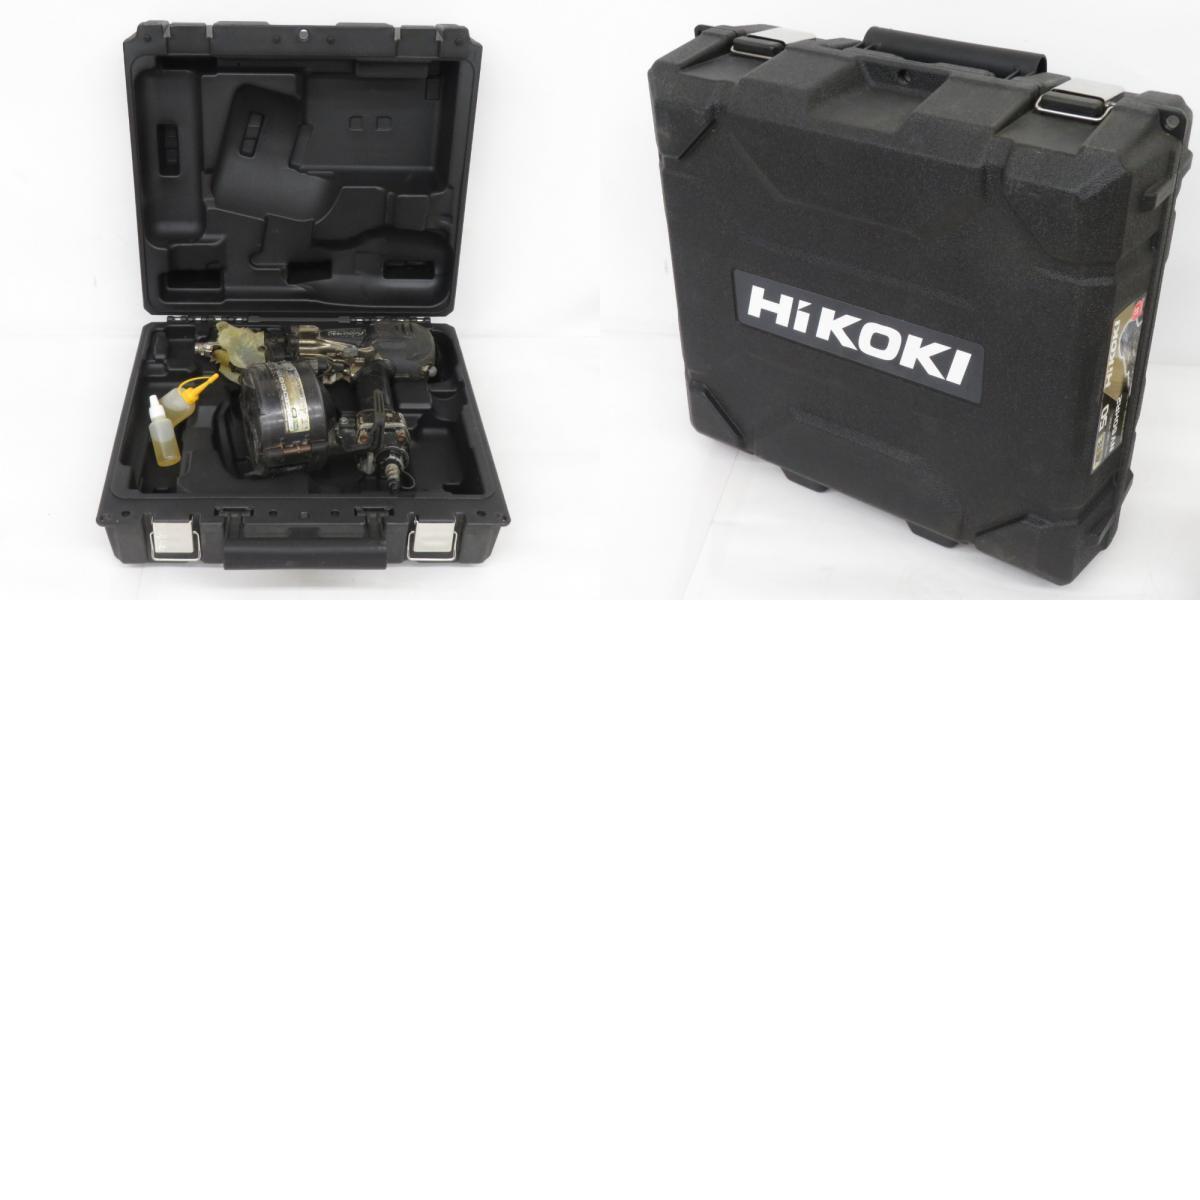 HiKOKI ハイコーキ 50mm 高圧ロール釘打機 パワー切替機能付 ケース付 NV50HR2(S) 中古_画像10